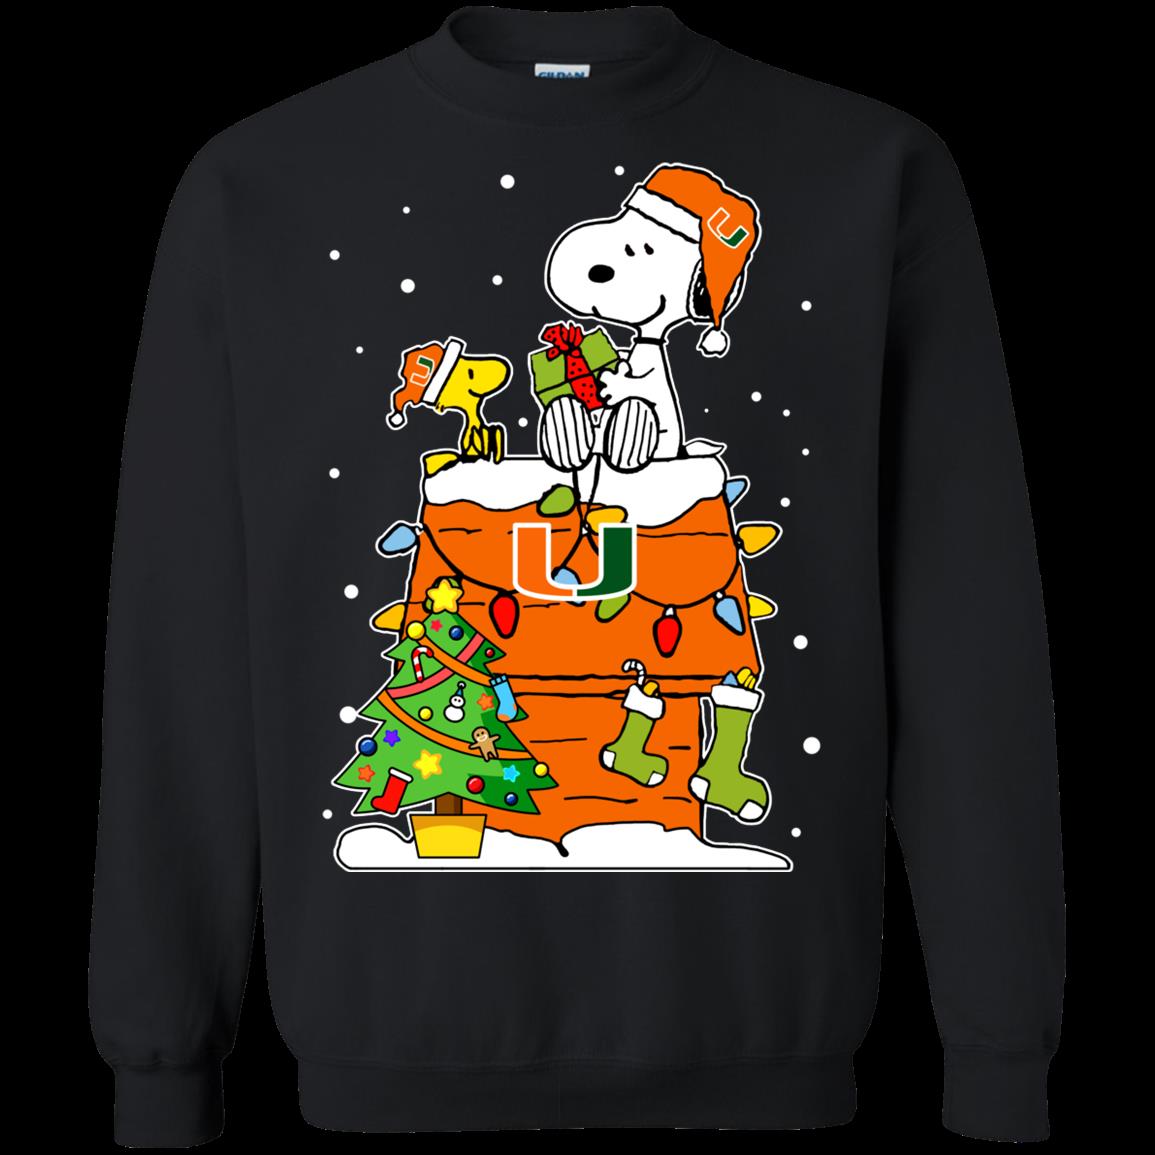 Miami ( Fl ) Hurricanes Ugly Christmas Sweaters Snoopy Woodstock Hoodies Sweatshirts